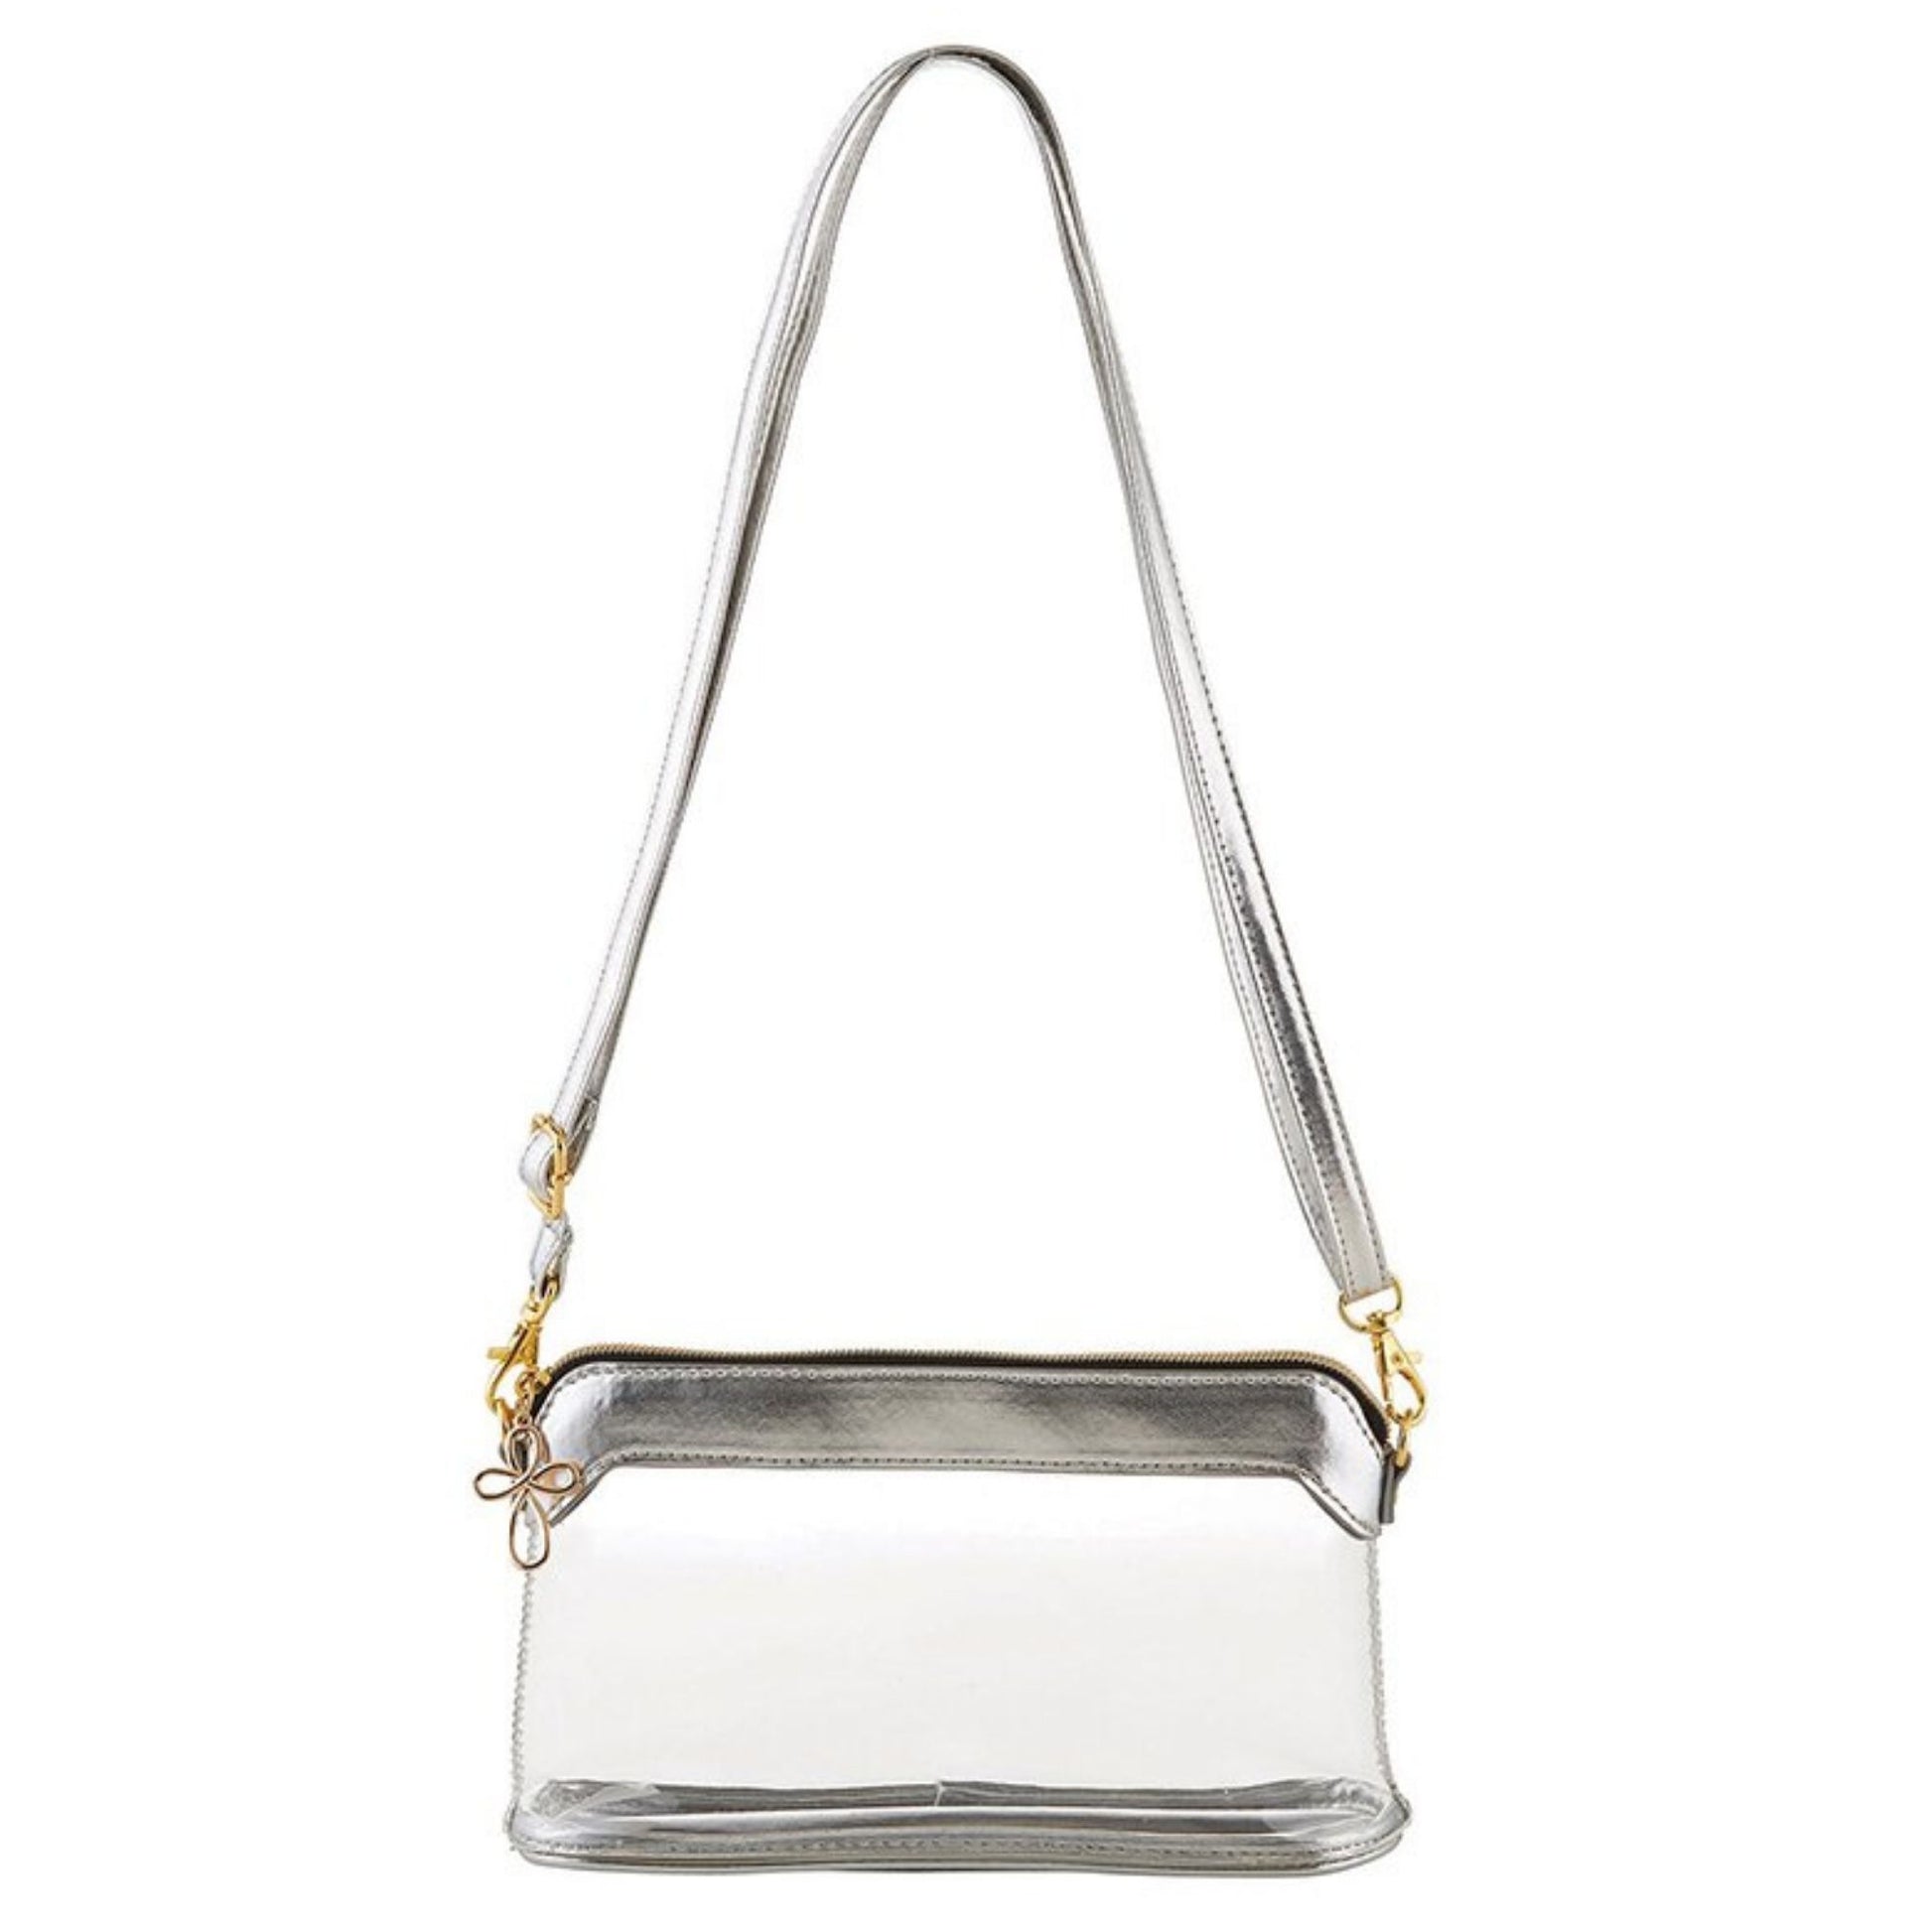 Clear Stadium Bags - Clear Purse with Strap - Clear Compliant Bag (Choose Black, Rose Gold, or Platinum) | Platinum shown | oak7west.com